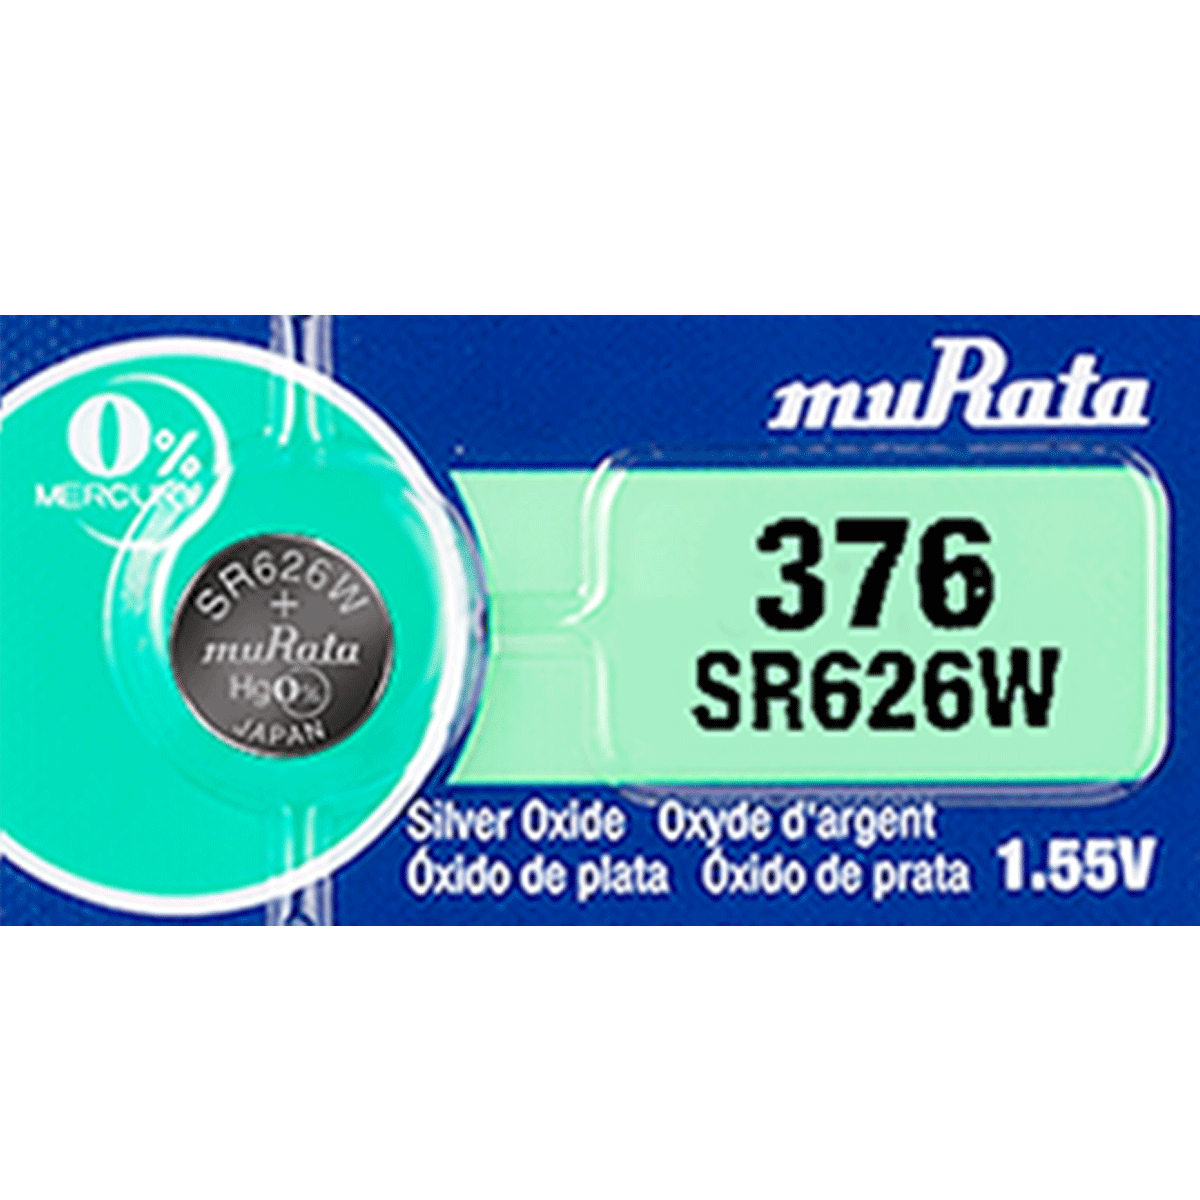 Murata 376 Battery (SR626) (formerly SONY) Mercury Free Silver Oxide 1.55V (1 Battery)